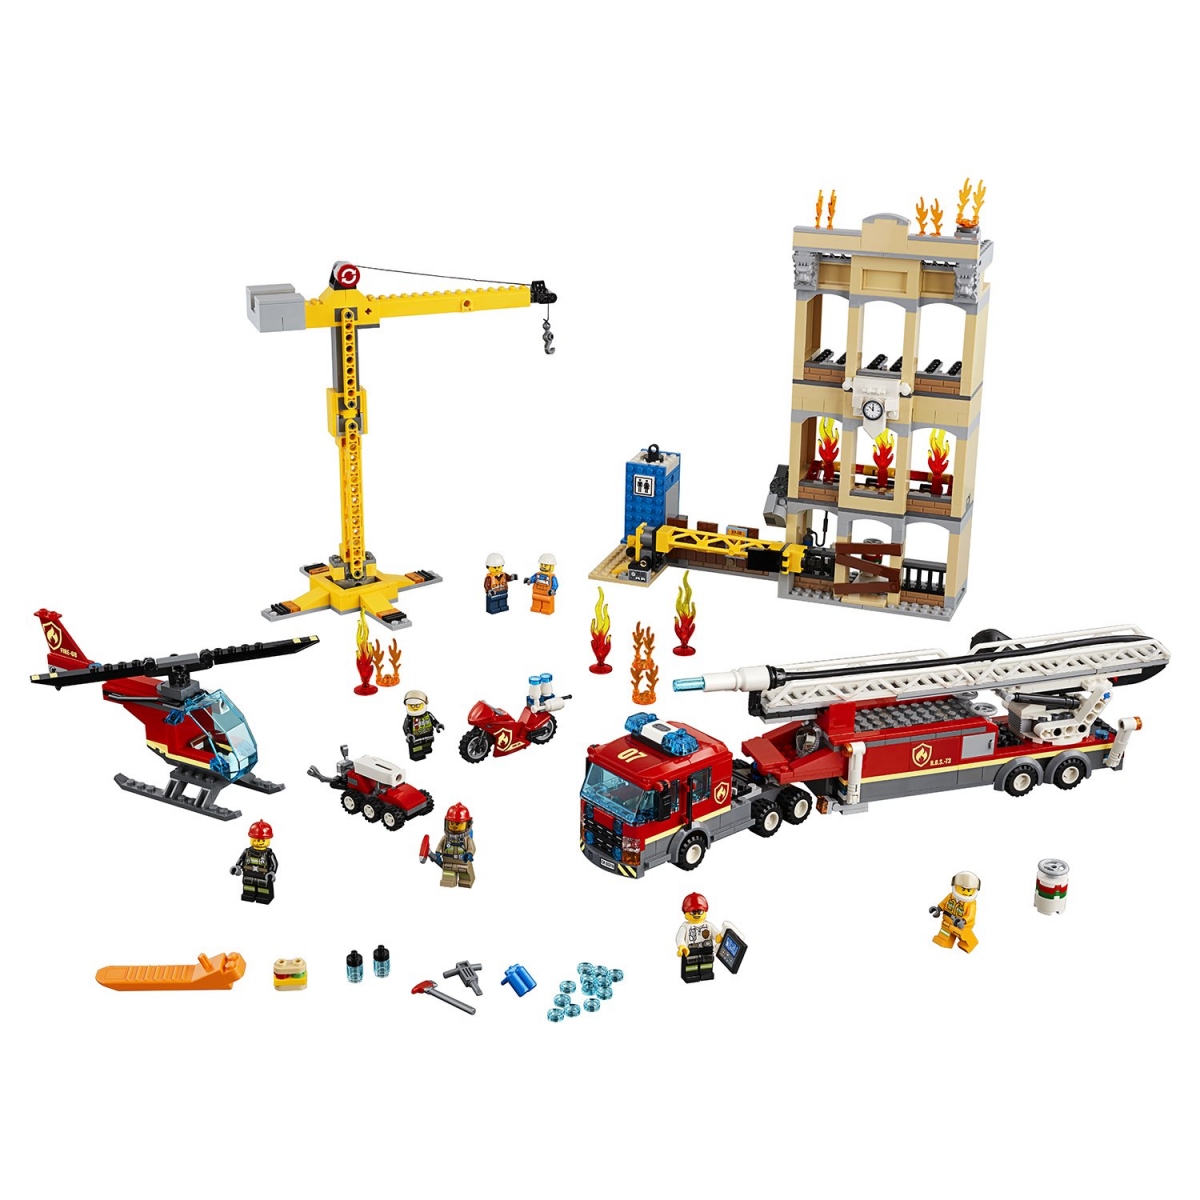   Lego City Fire   